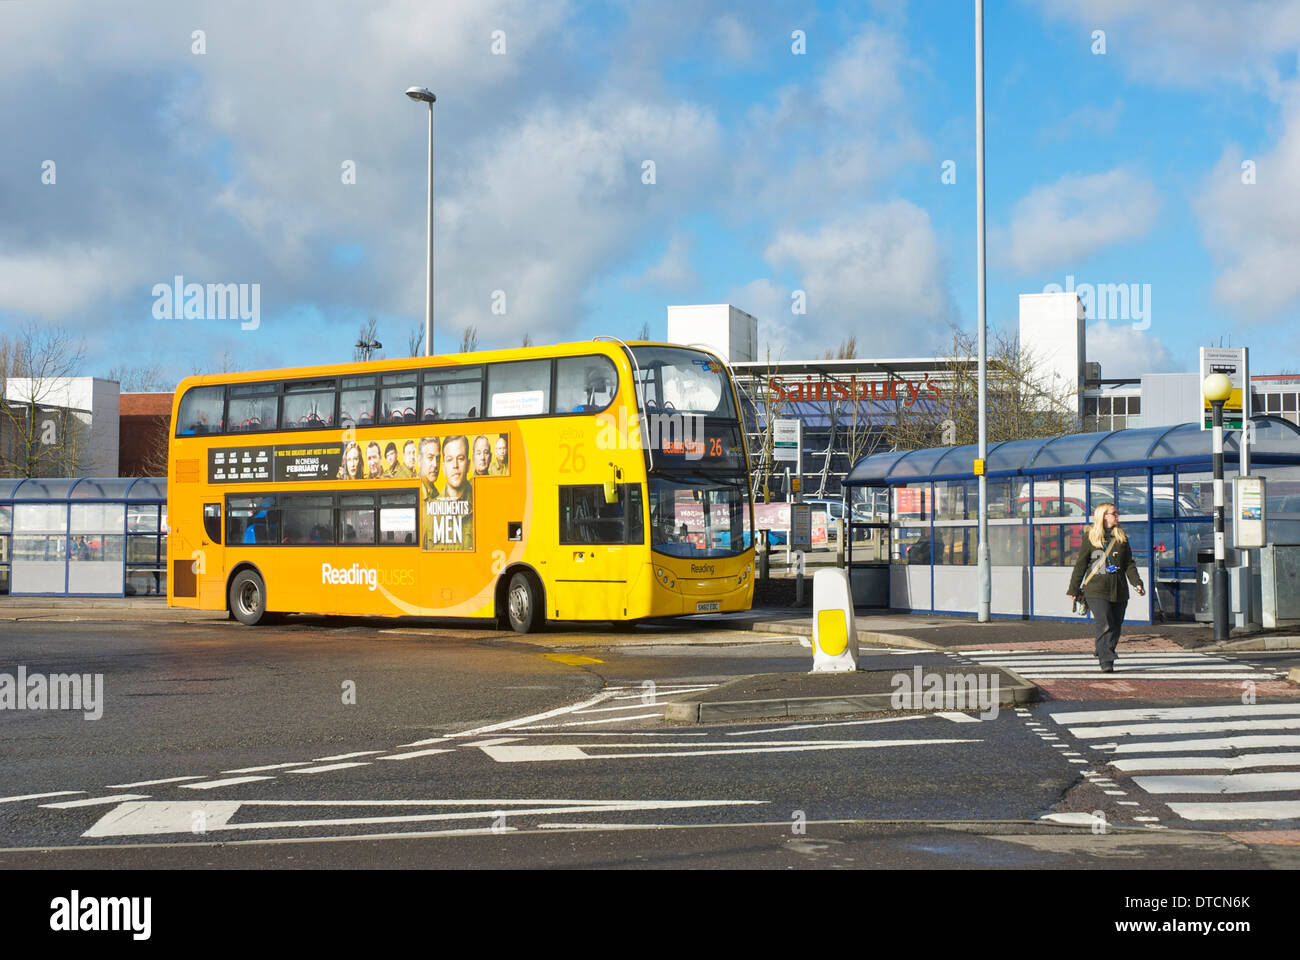 Bus stopped at Calcot coachway, near Reading, Berkshire, England UK Stock Photo